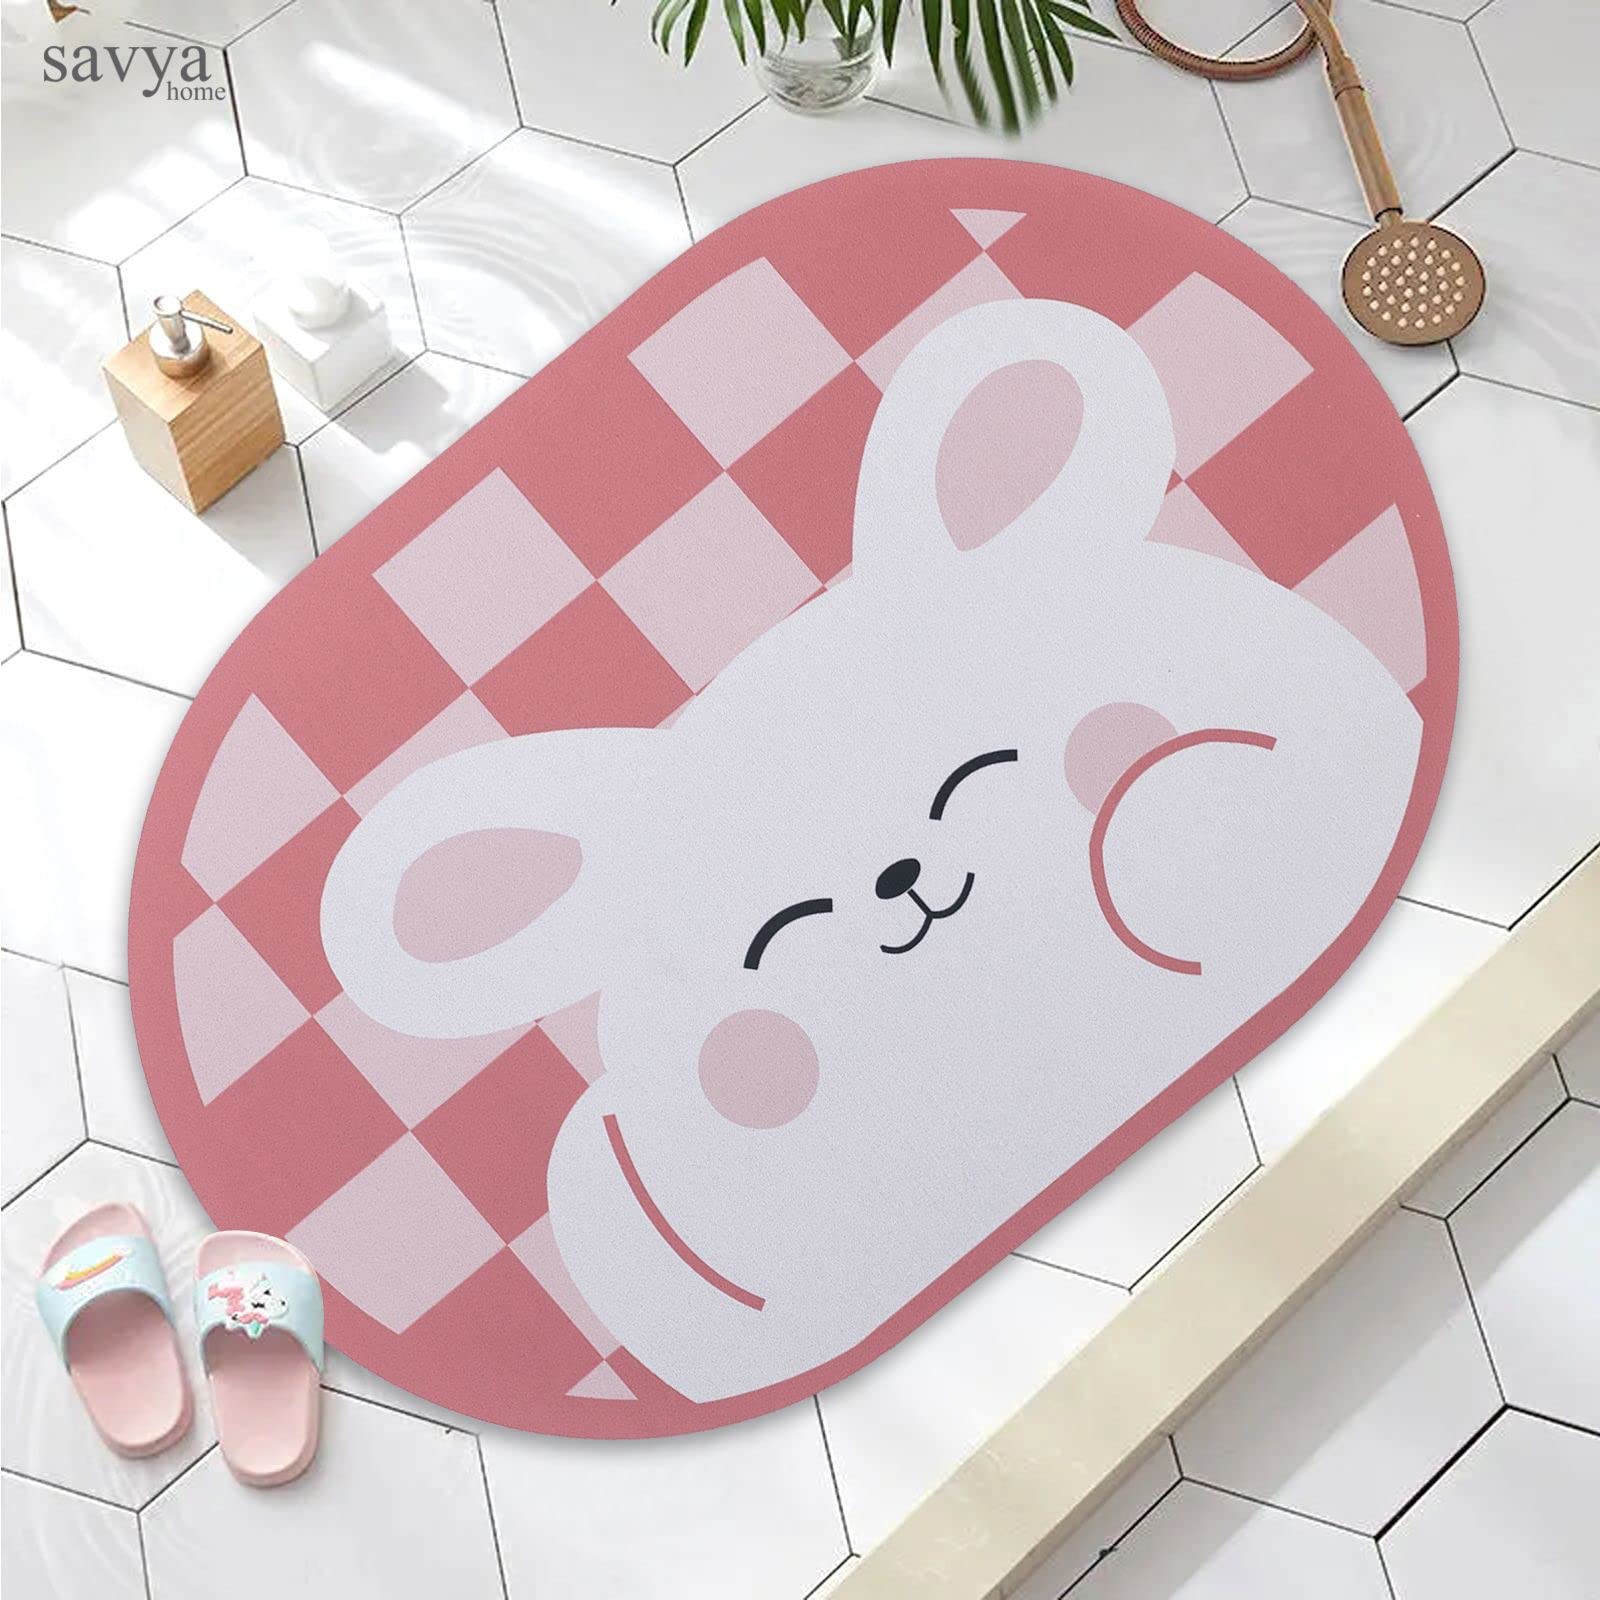 SAVYA HOME Multipurpose Mat for Kids Bedroom, Play Area, Living Room, Bathroom, Shower | 60 x 40 | Anti-Skid, Cute Pink Bunny Doormat for Girls Bedroom